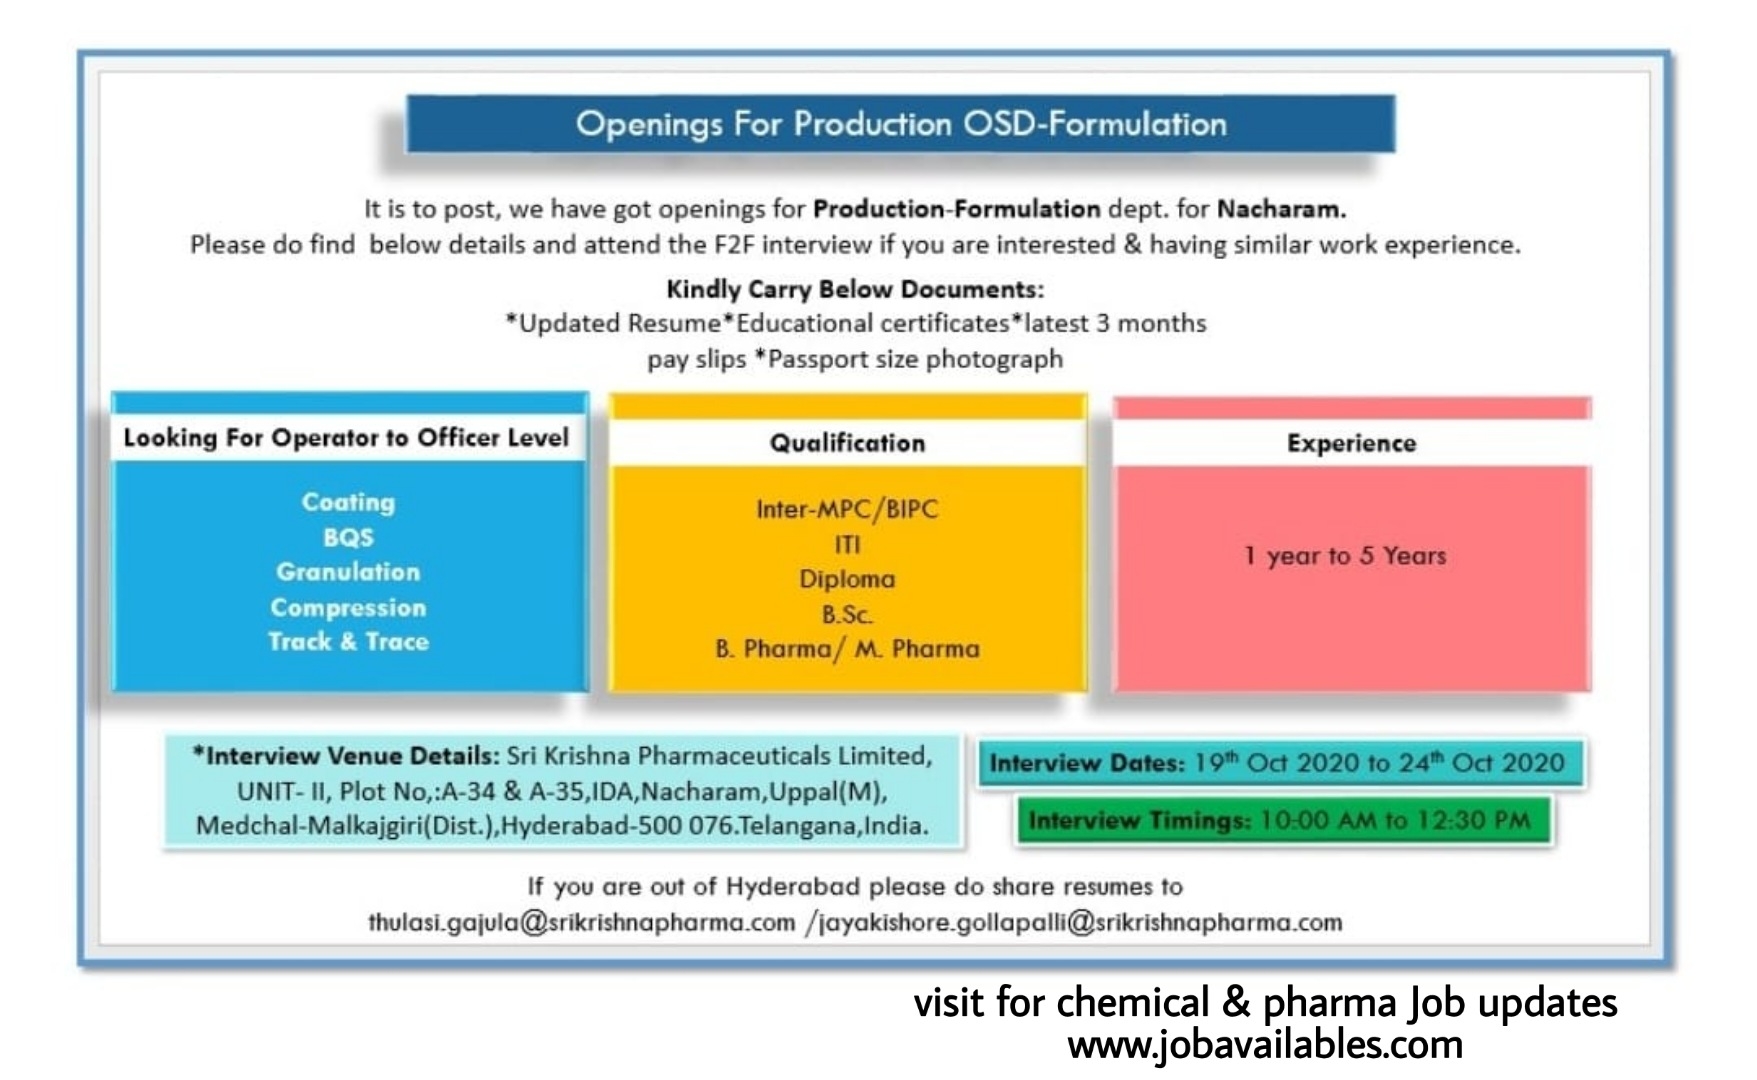 Job Availables, Sri Krishna Pharmaceuticals Ltd Walk-In Interview for Production OSD – Formulation